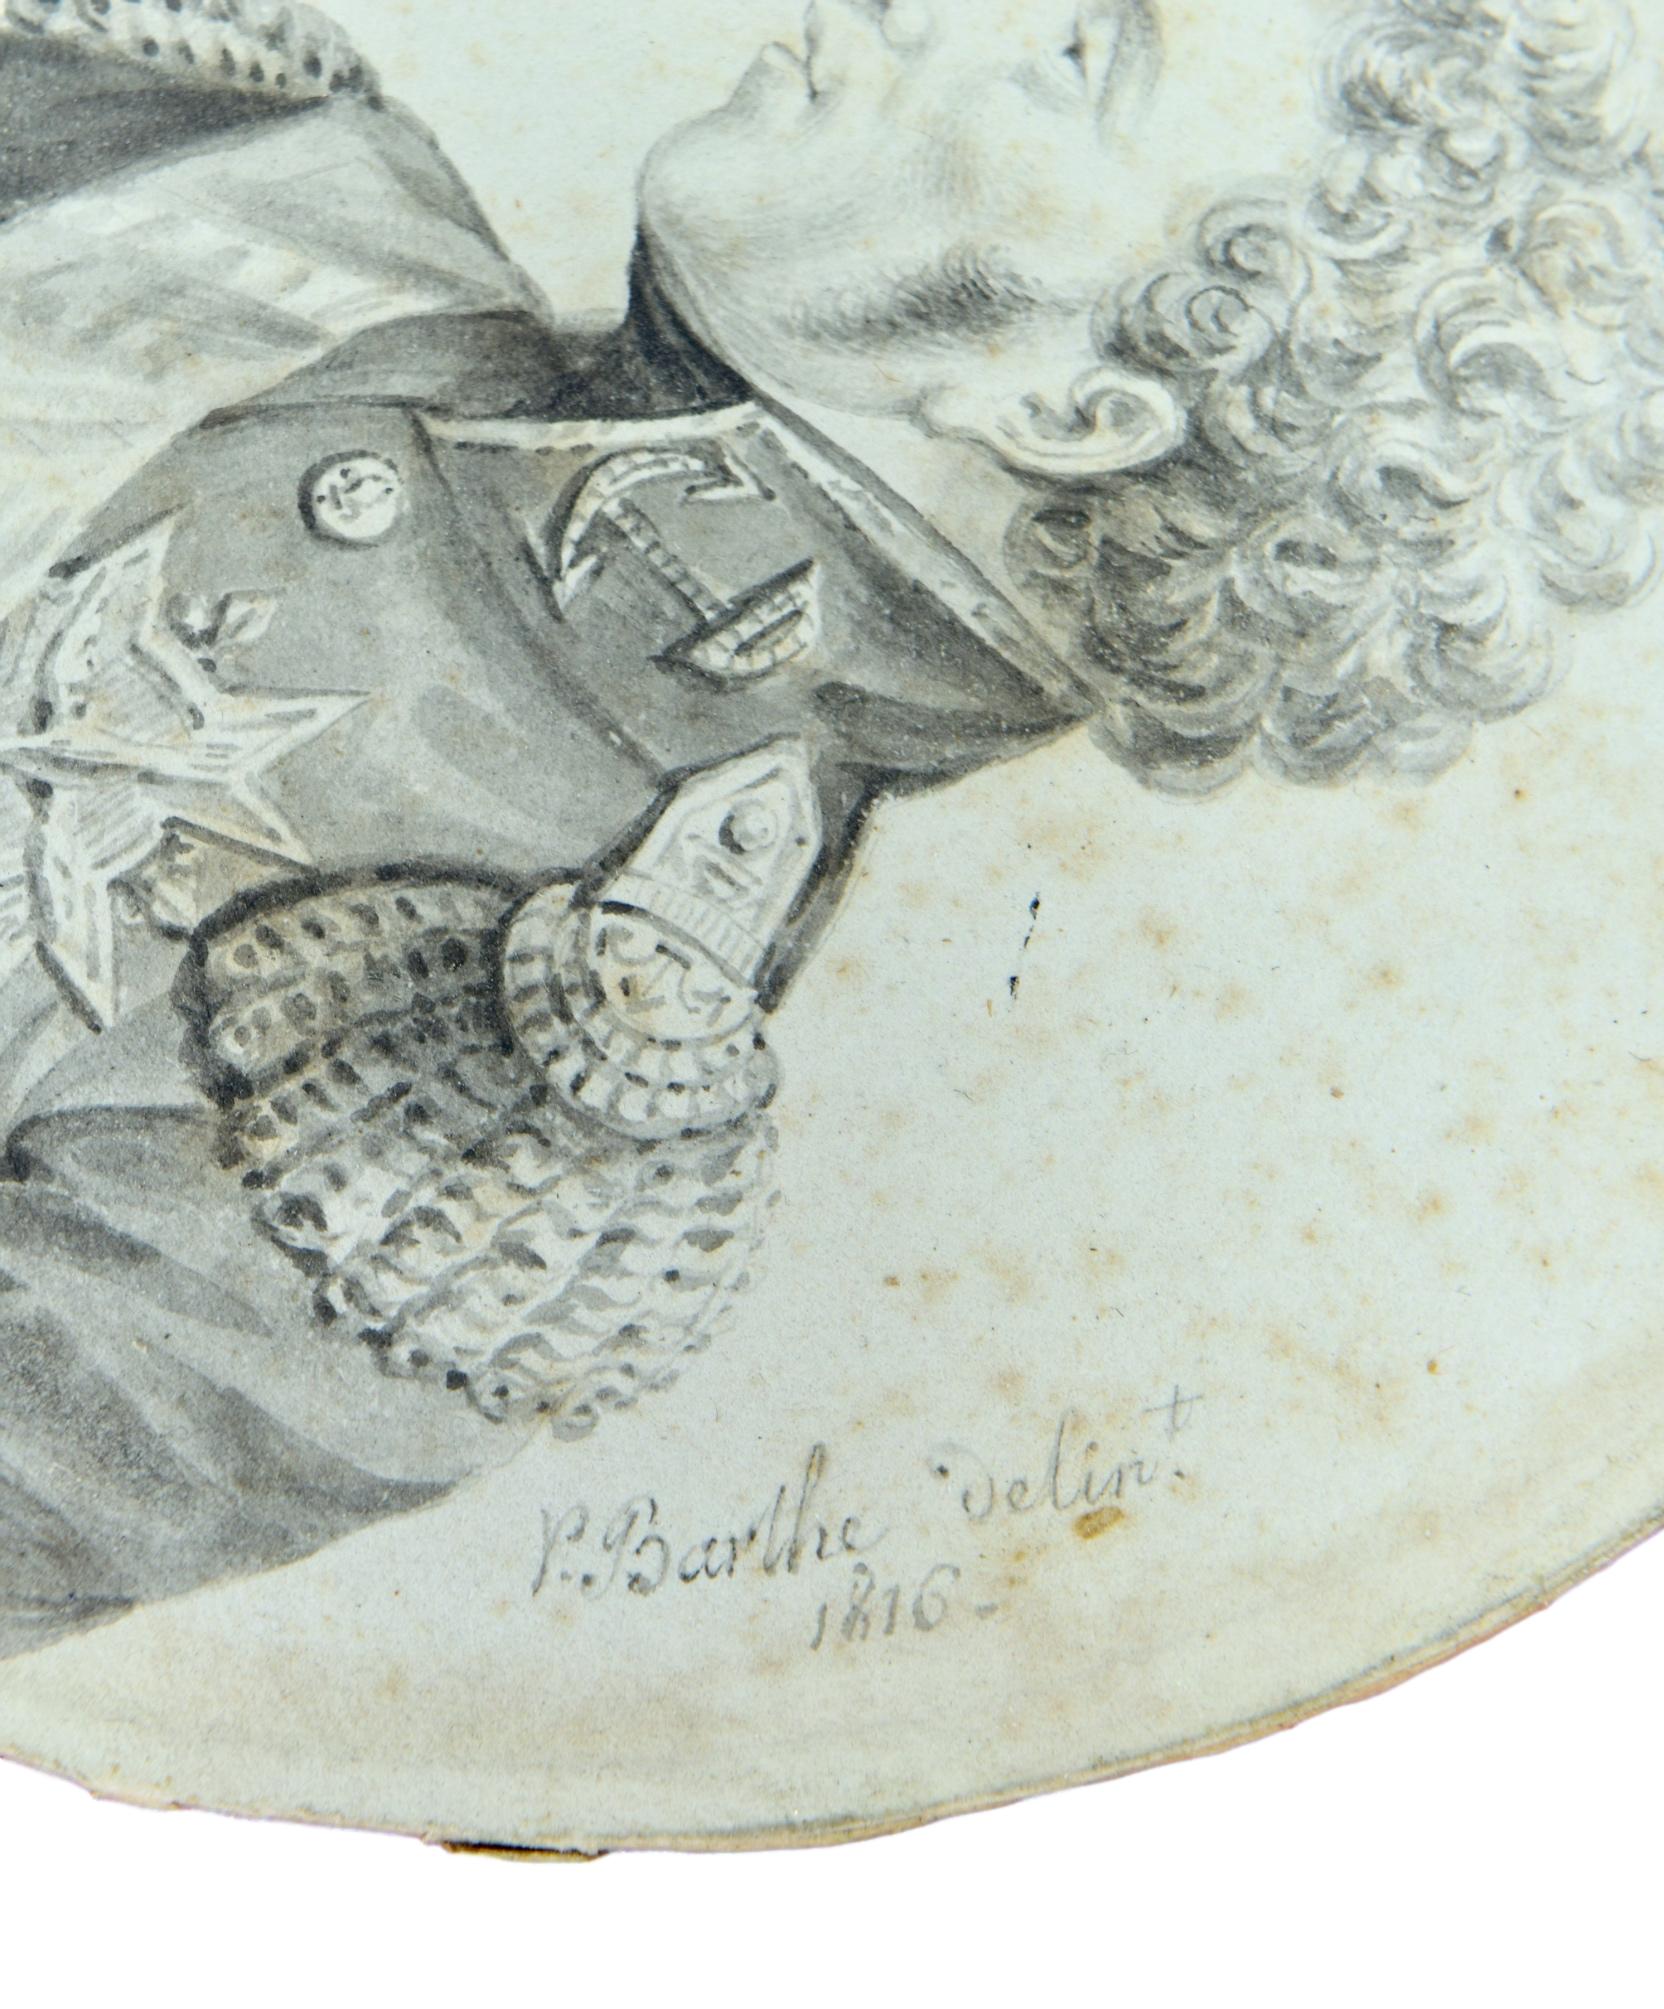 Miniature Drawing Marshal 1816 - Charmantiques